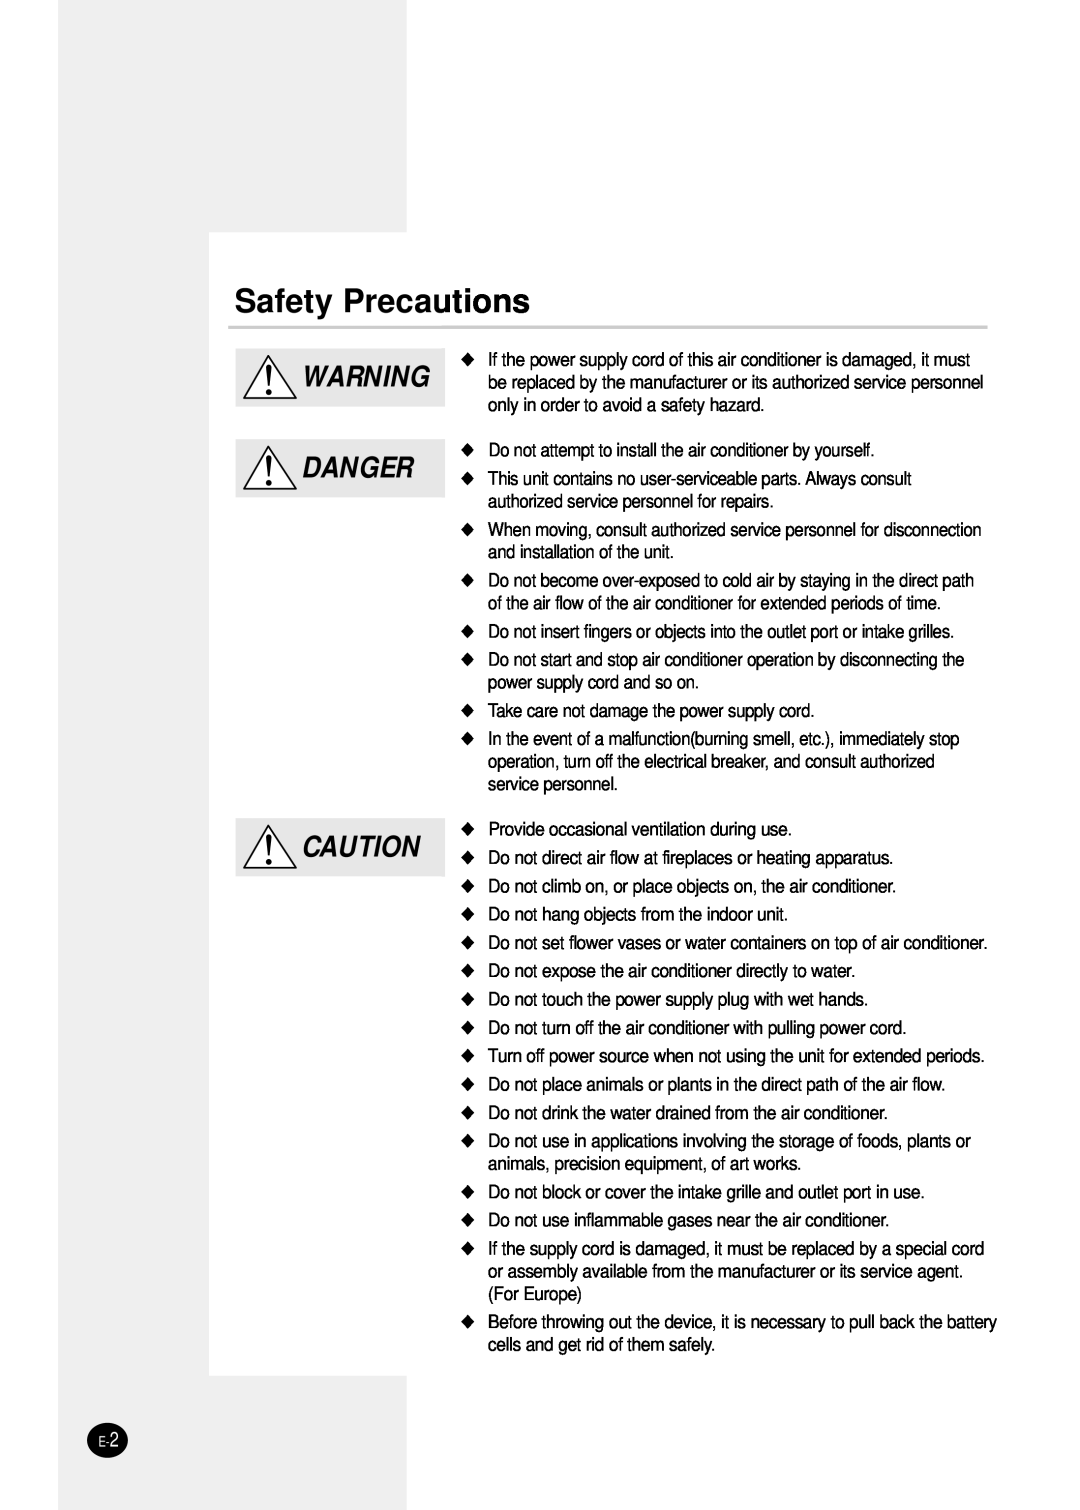 Samsung UQ09P8GE, AQ24P6GB, UQ07PBGE, UQ07P8GE, AQT24P6GE, SH24TP6A, SH09ZPGA, SH12ZPG, SH07ZPGAX Safety Precautions, Danger 